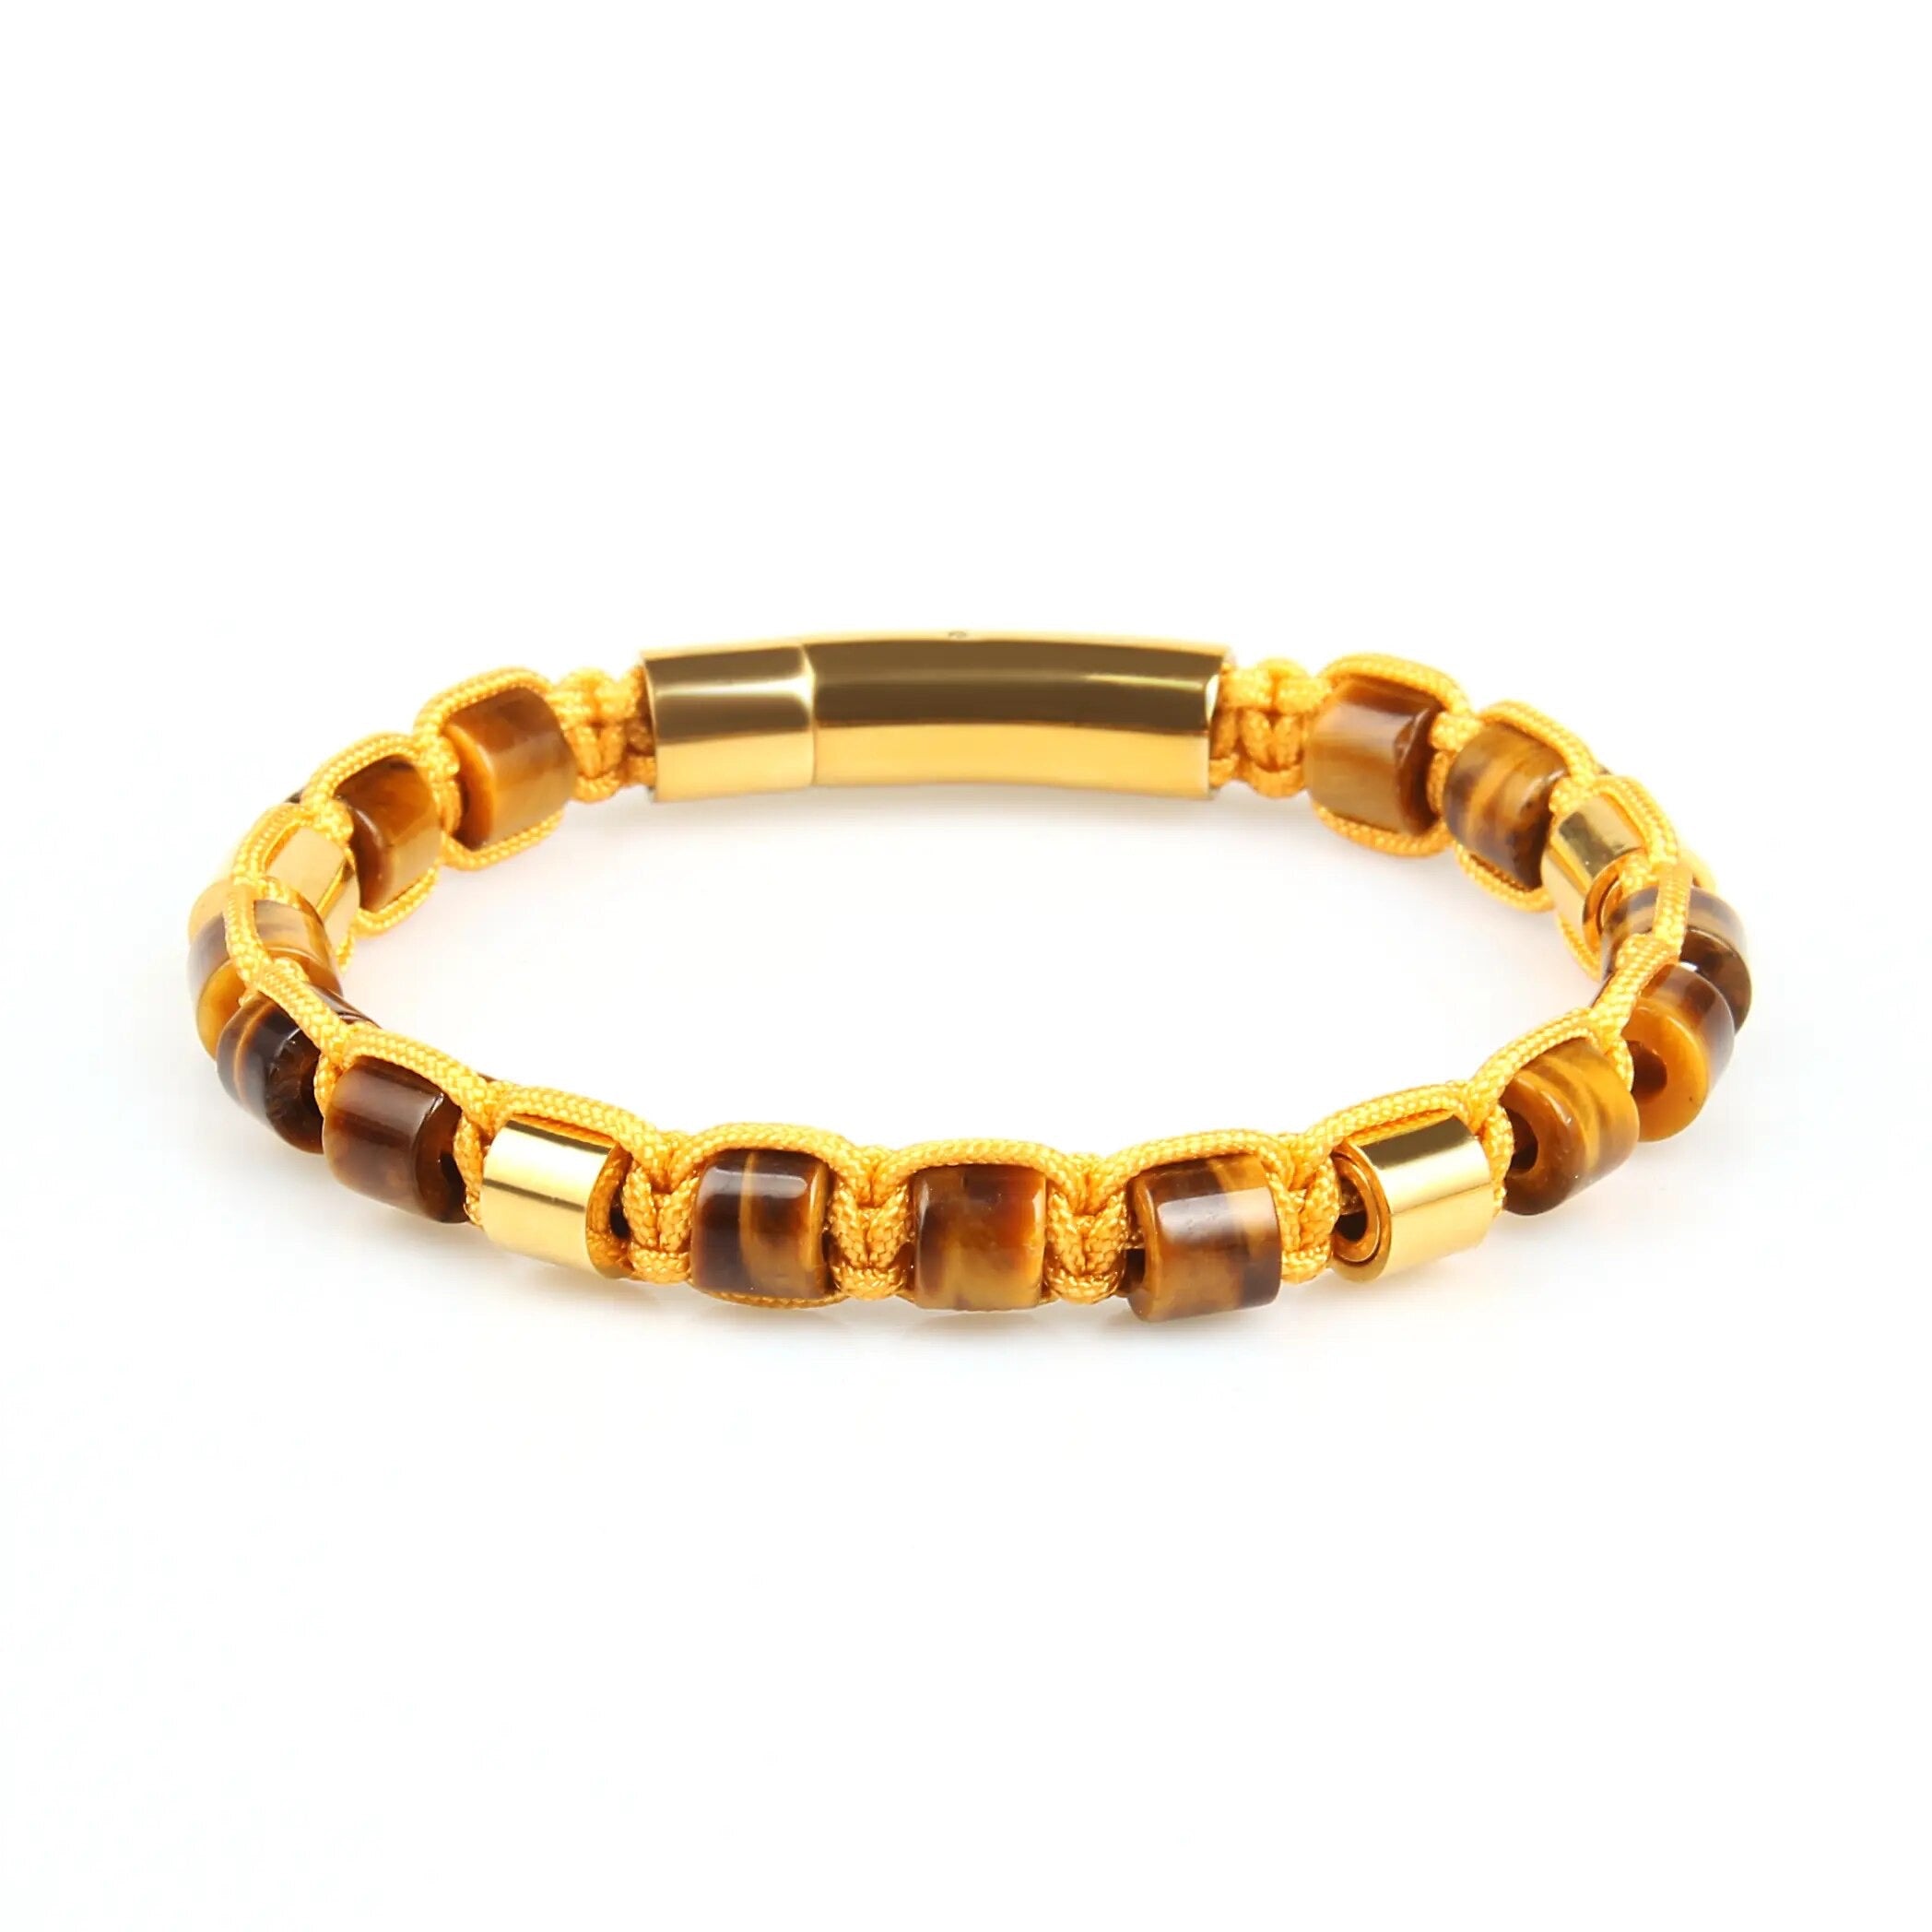 Tiger Eye & Gold Beads Bracelet - My Harmony Tree